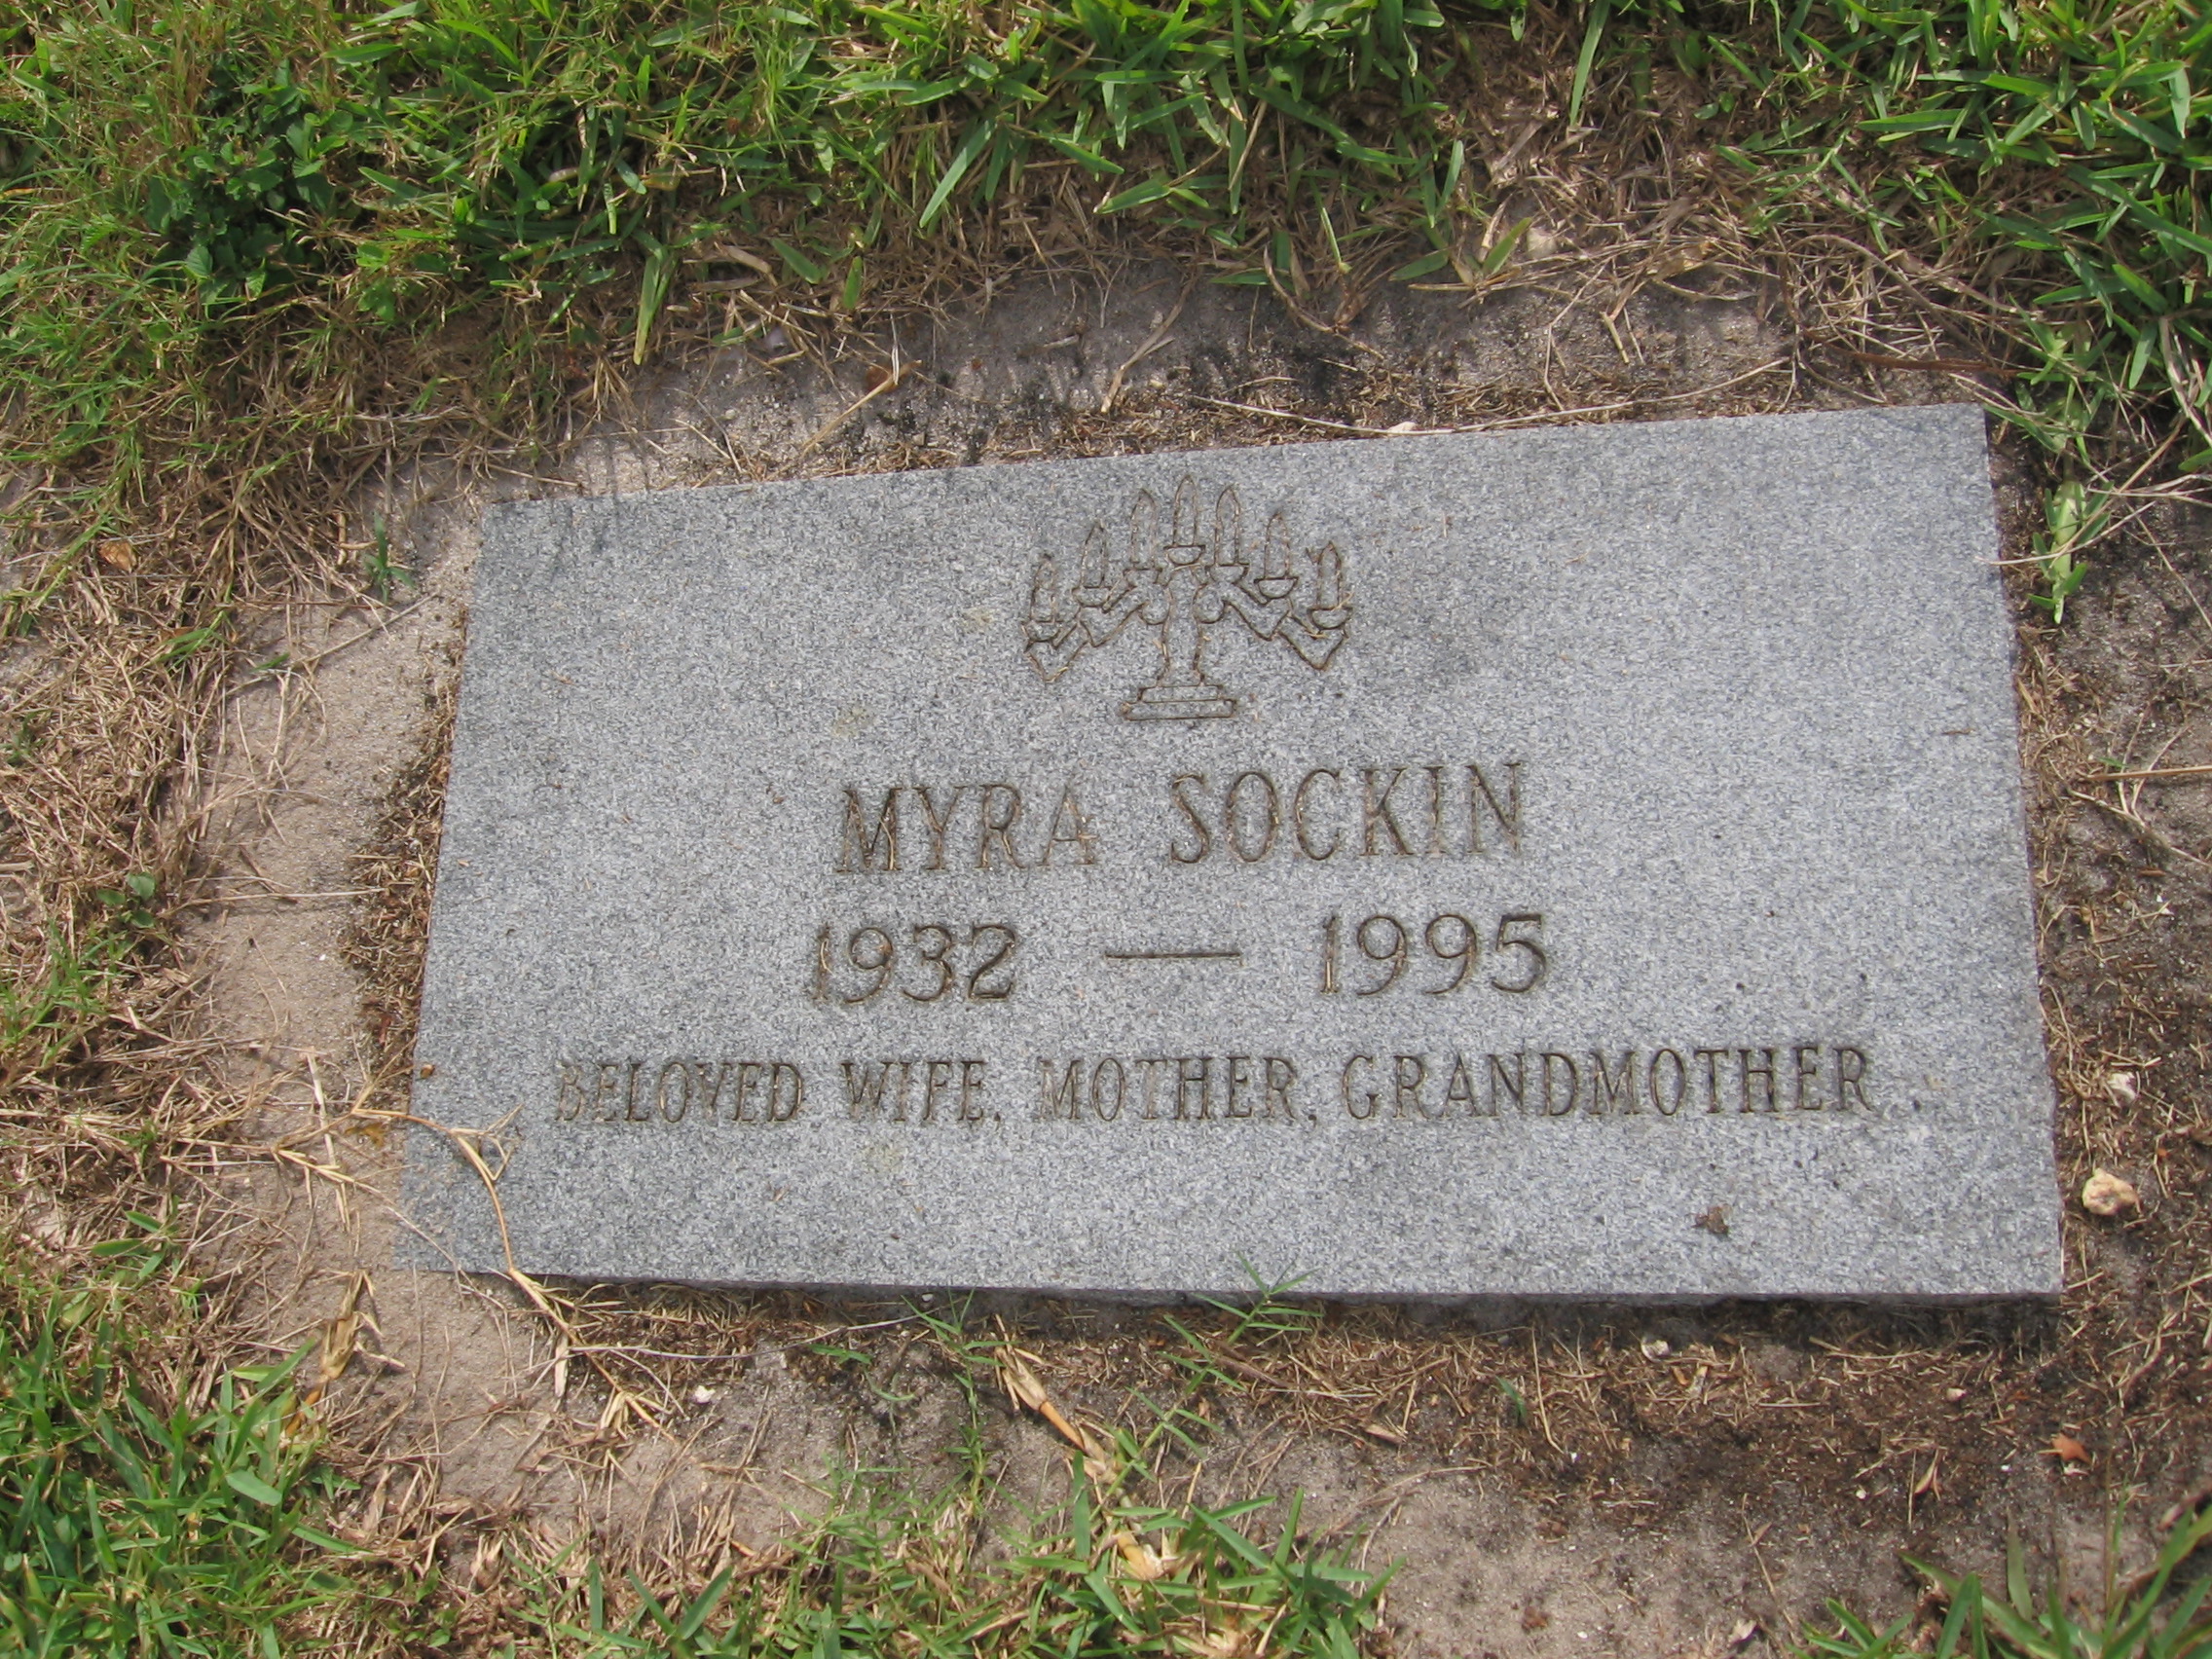 Myra Sockin